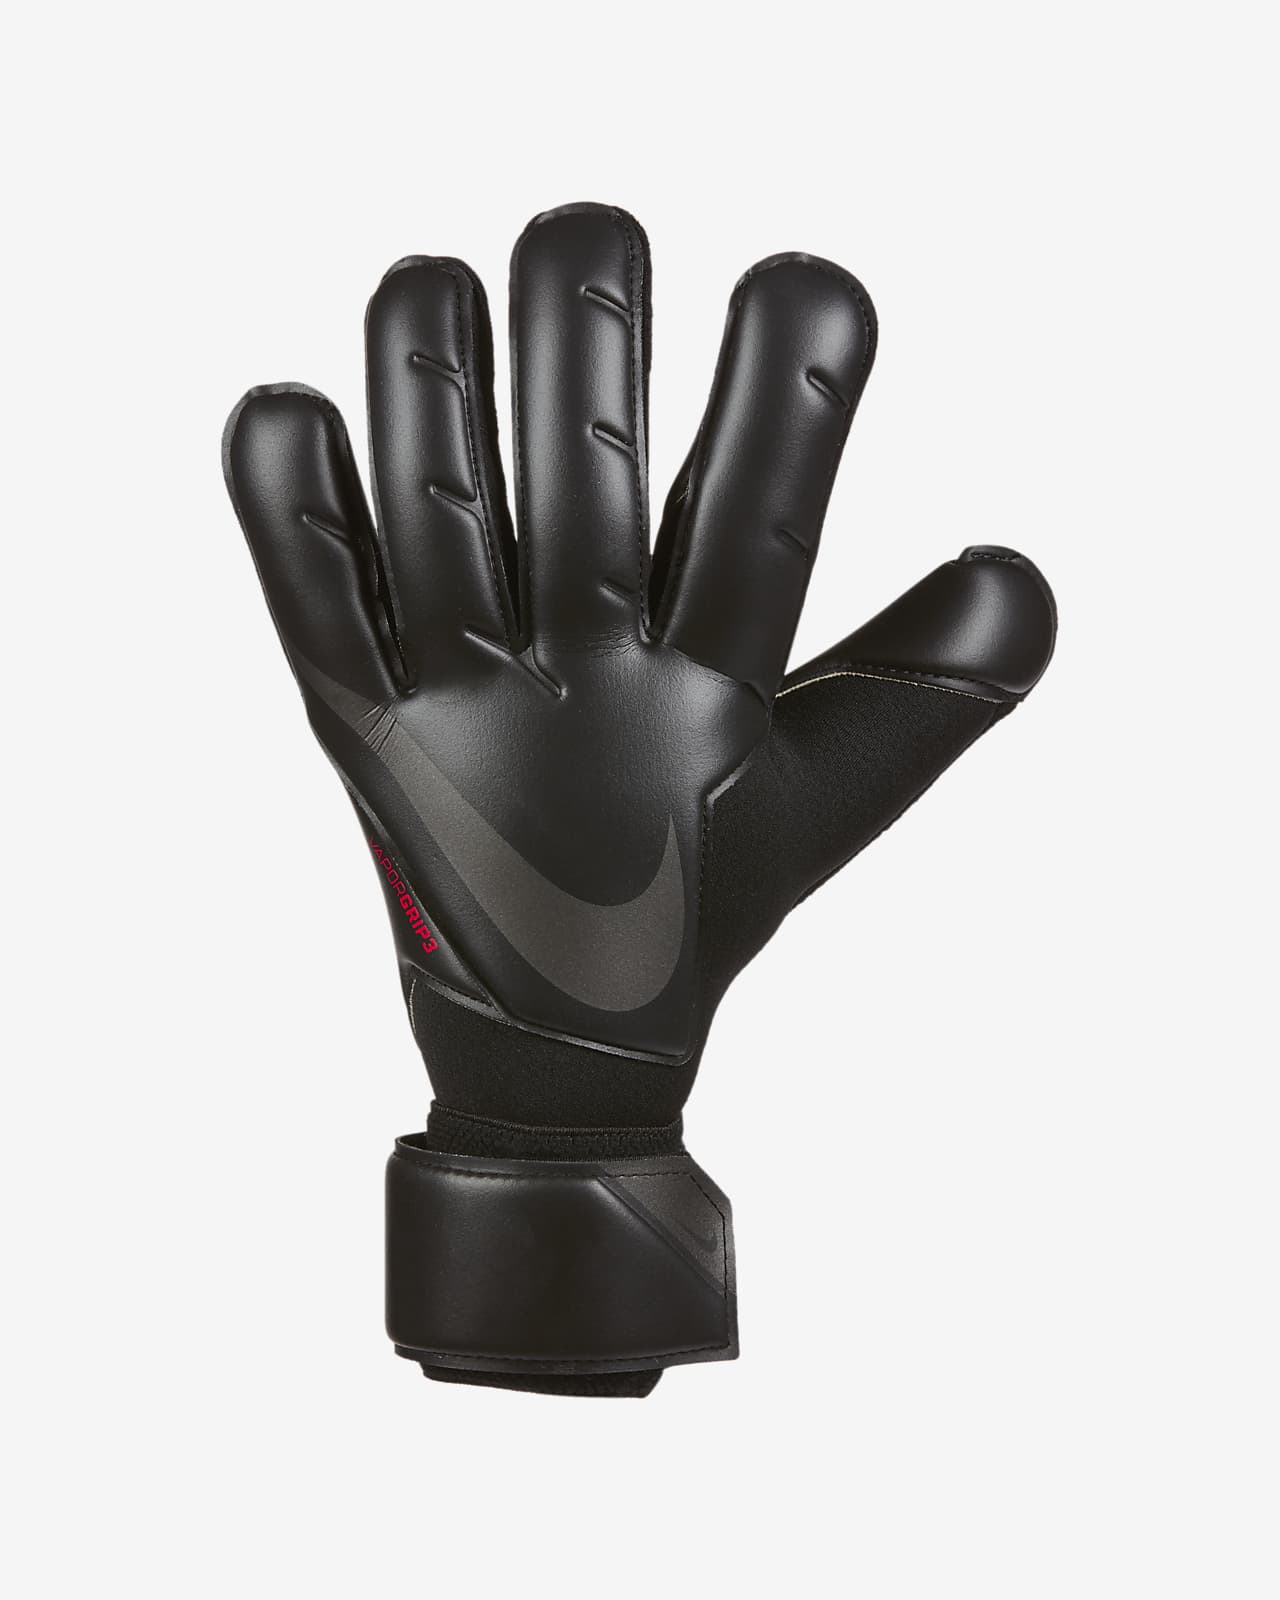 nike vapormax football gloves